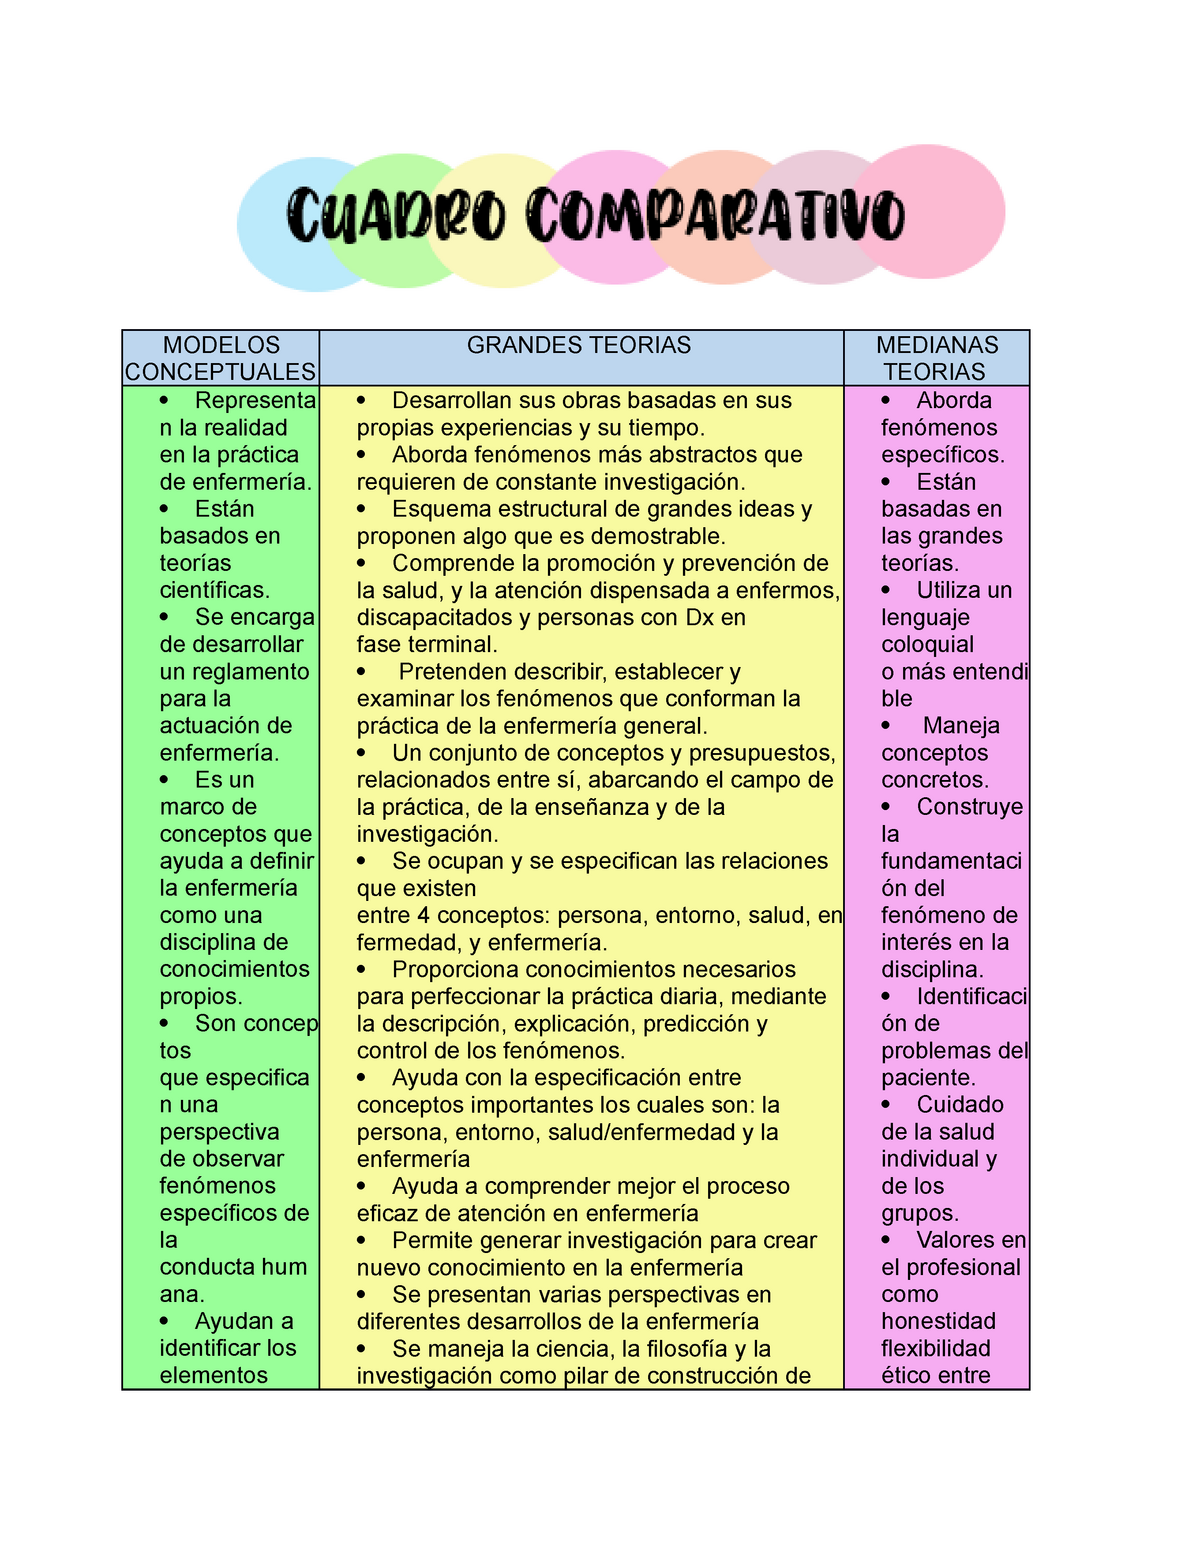 Cuadro Comparativo Modelos Atc B Micos Docx Images And Photos Finder